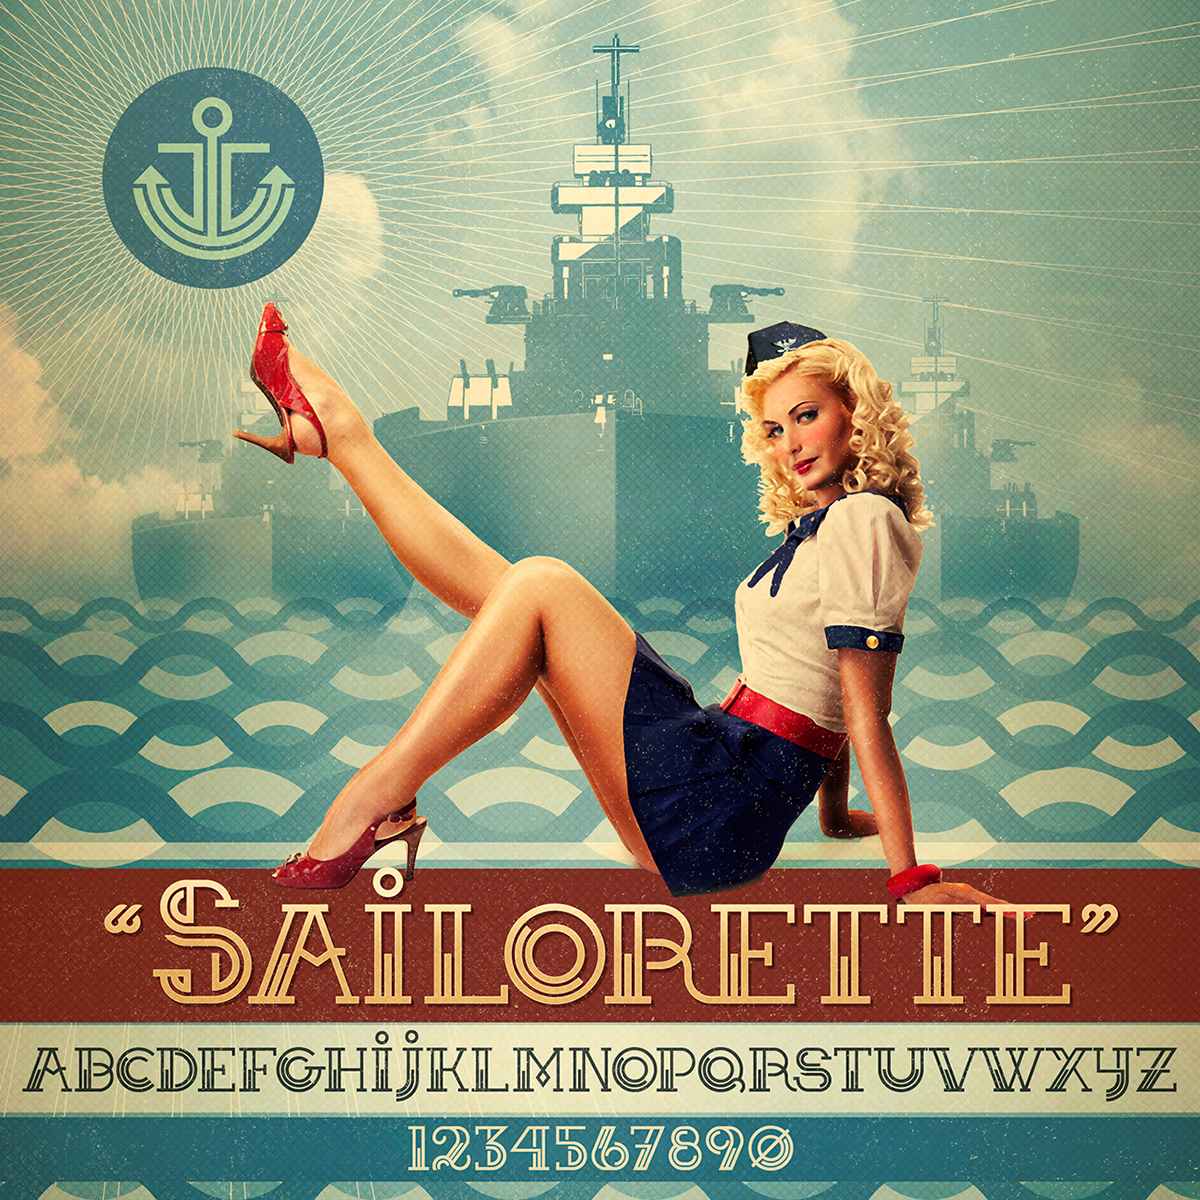 Sailorette